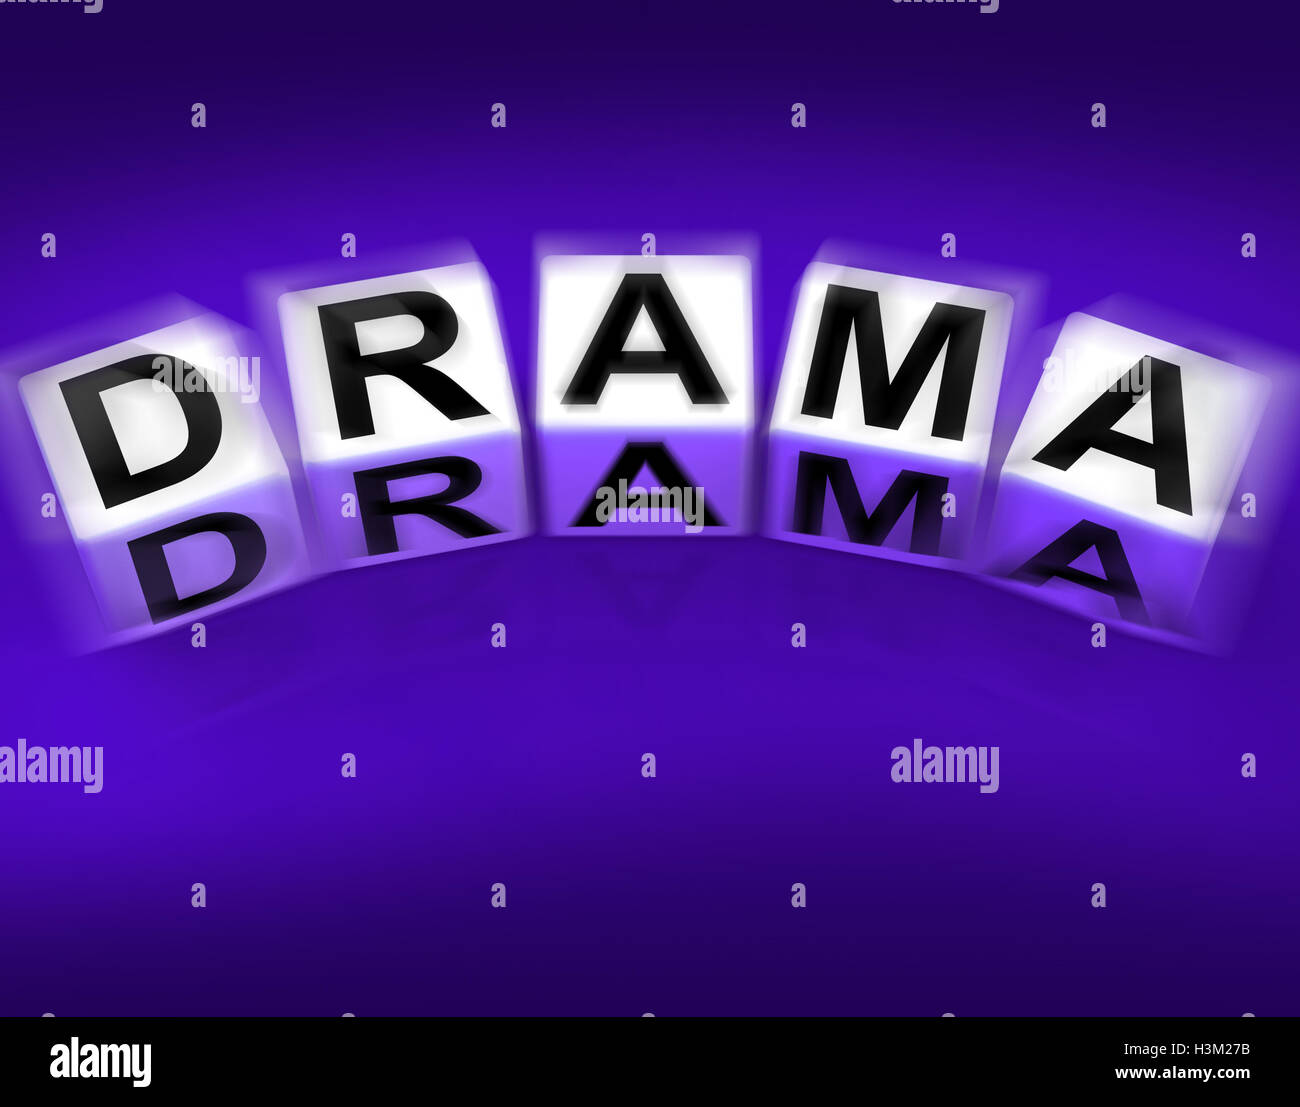 Drama Blocks Displays Dramatic Theater or Emotional Feelings Stock Photo